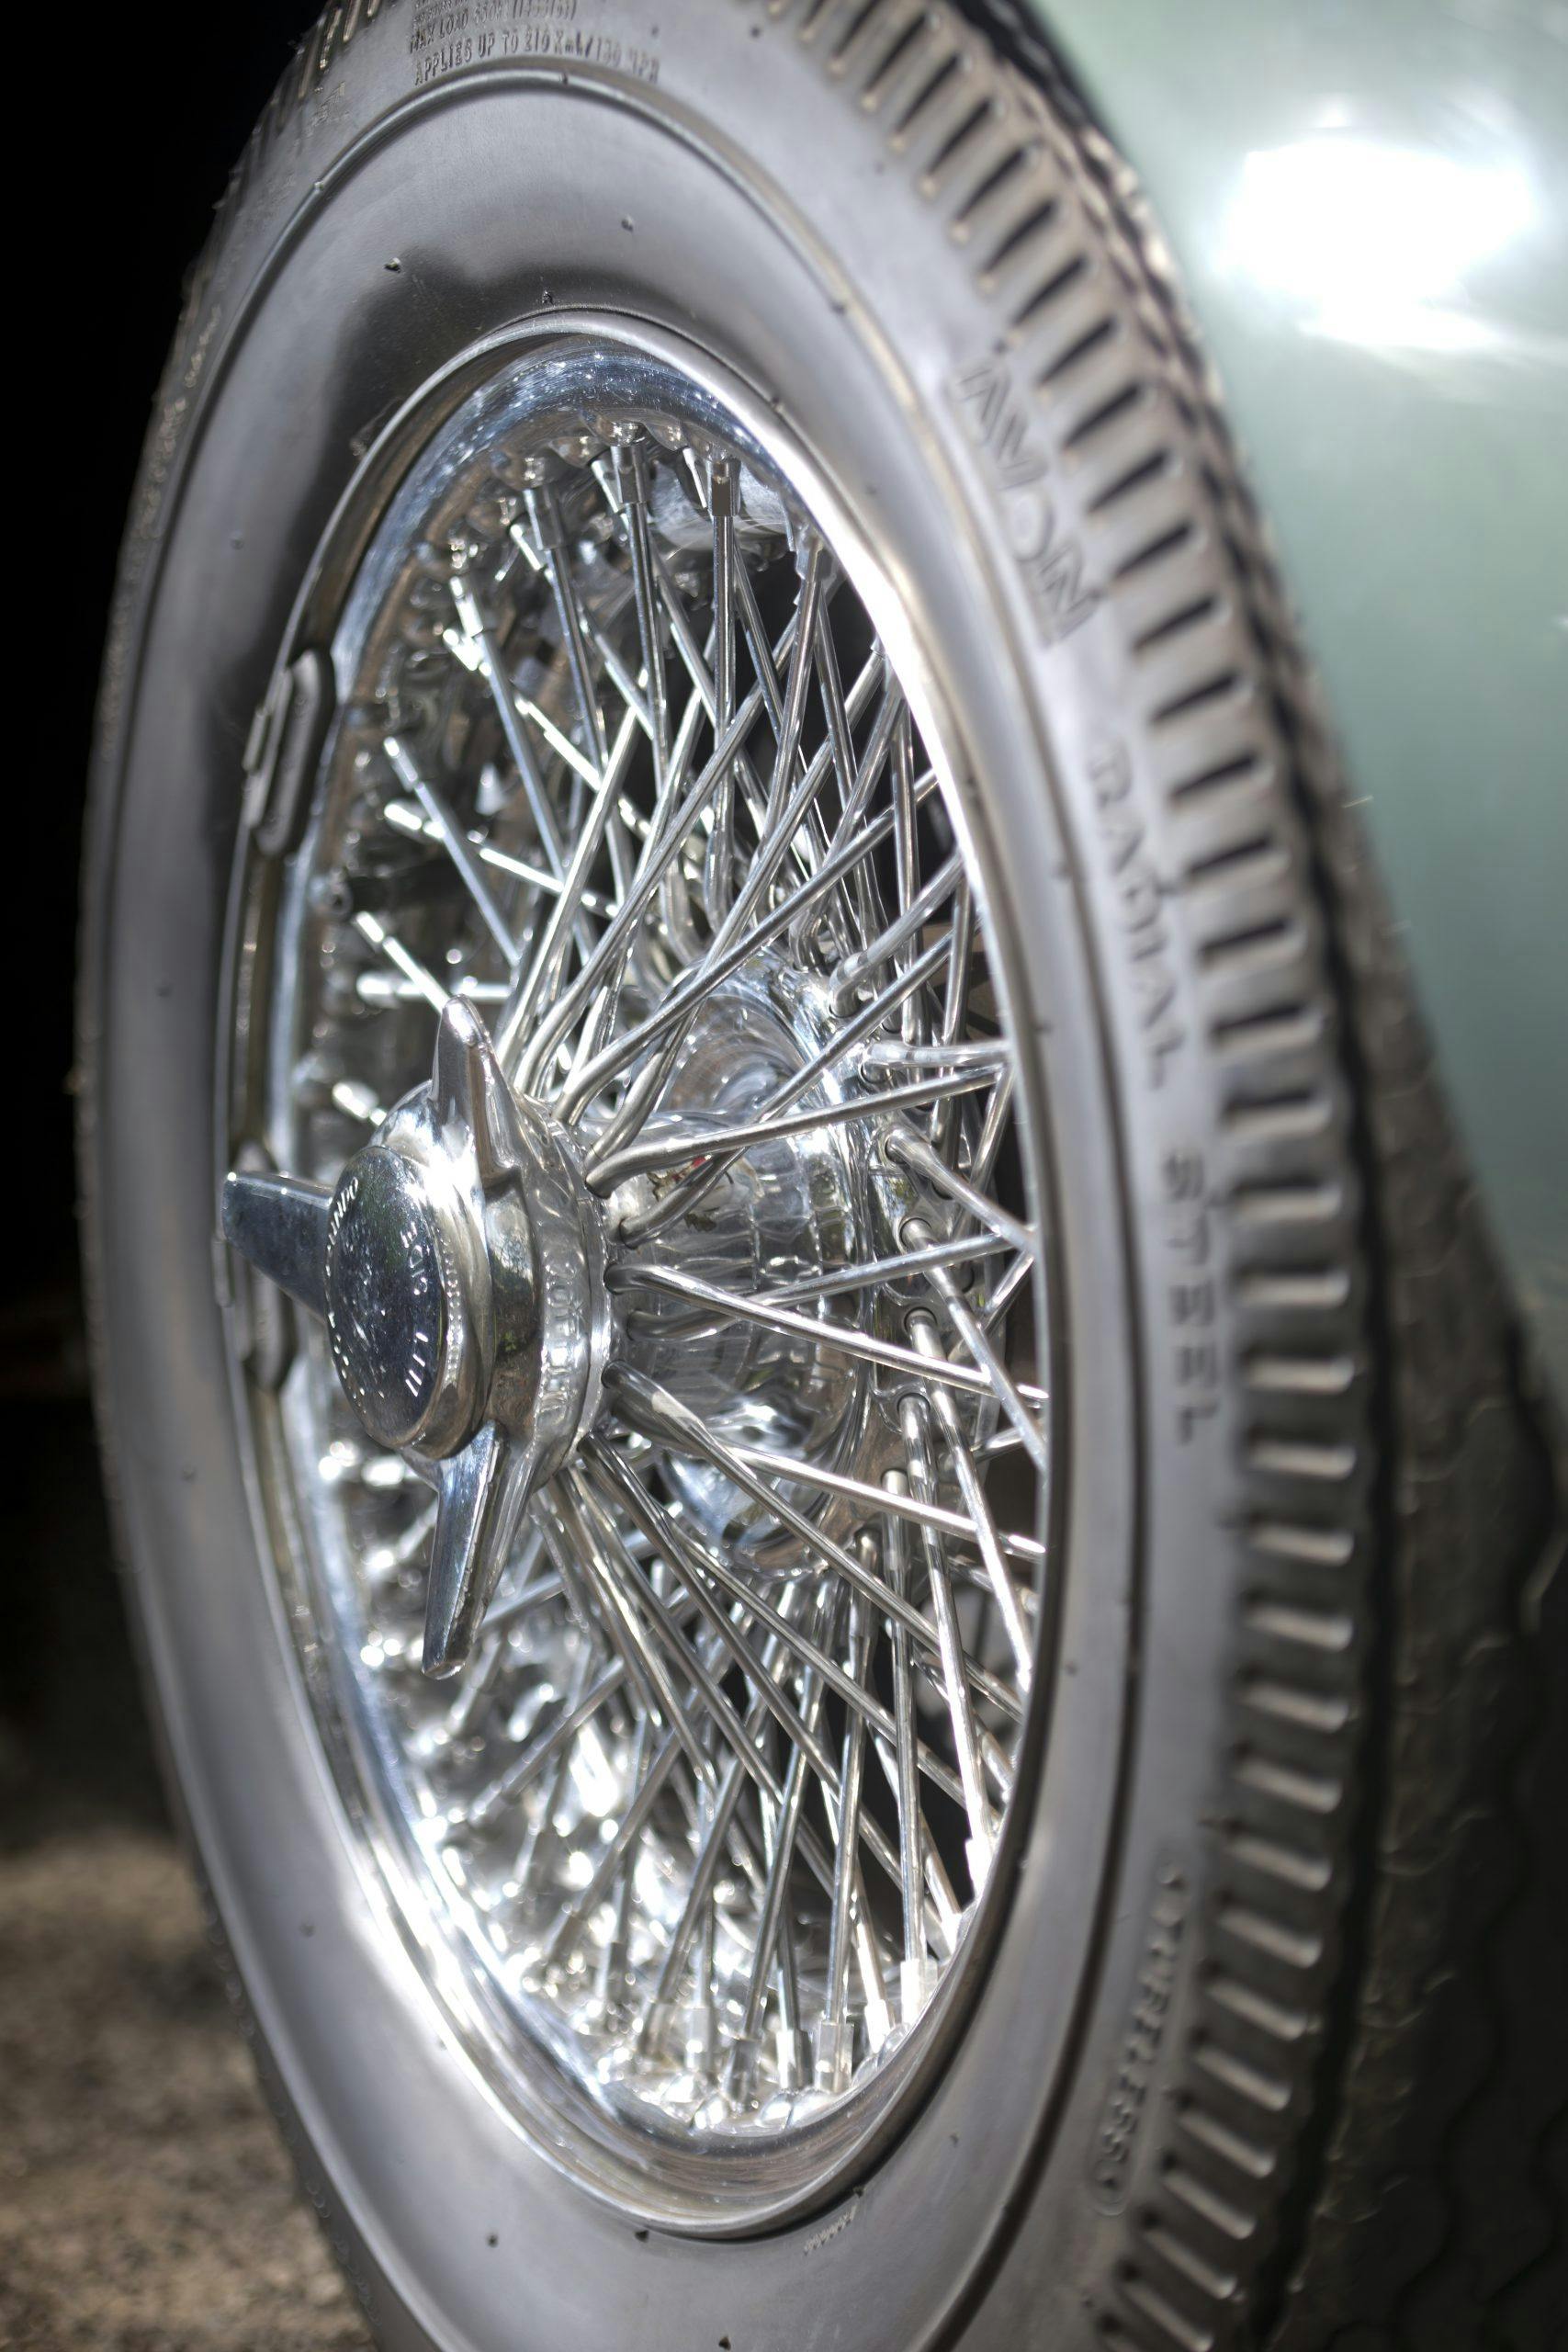 Aston Martin DB4 wheel tire closeup vertical